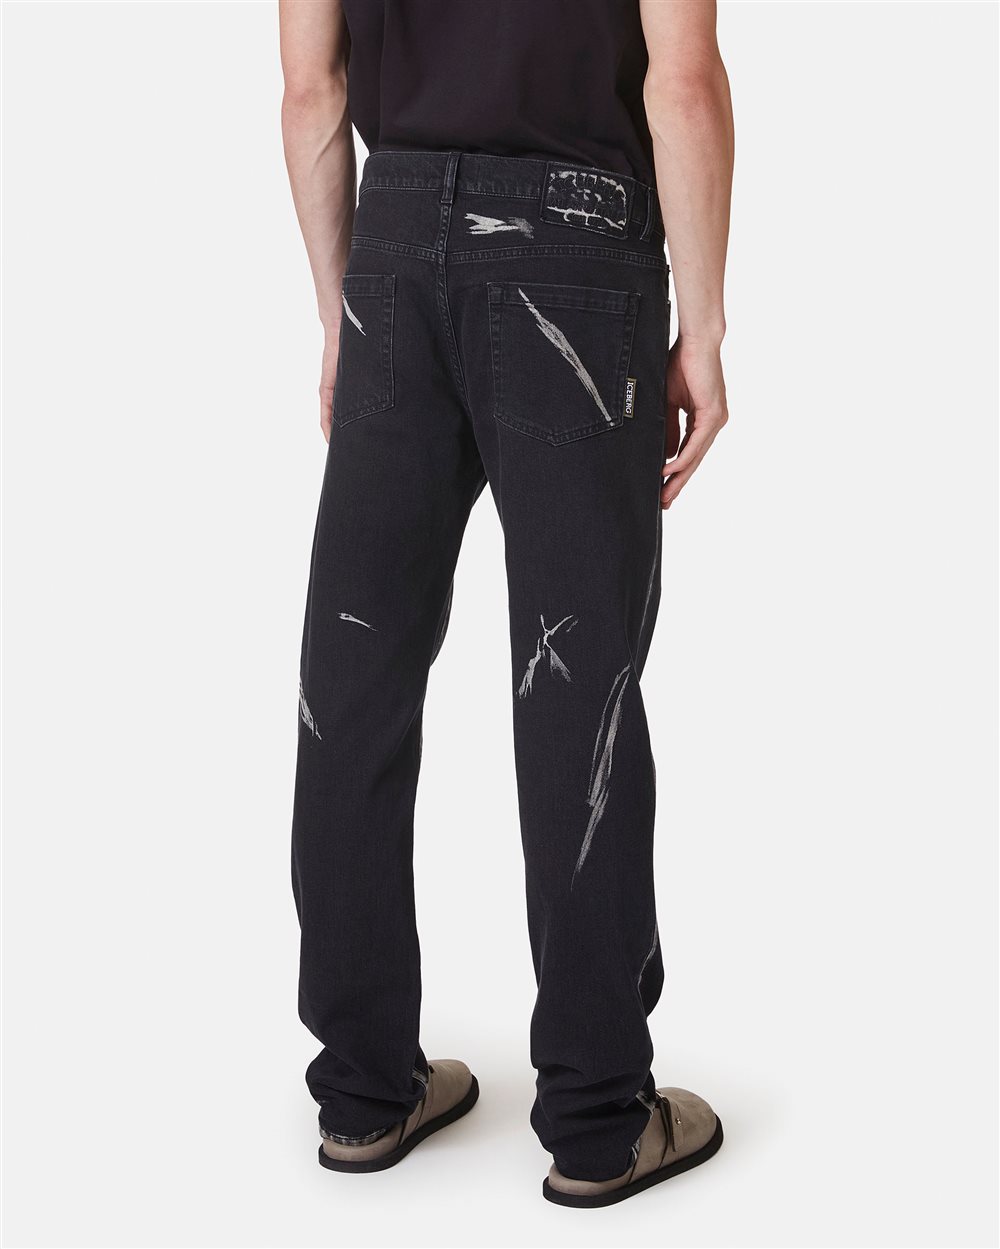 5 pocket jeans with logo - Iceberg - Official Website